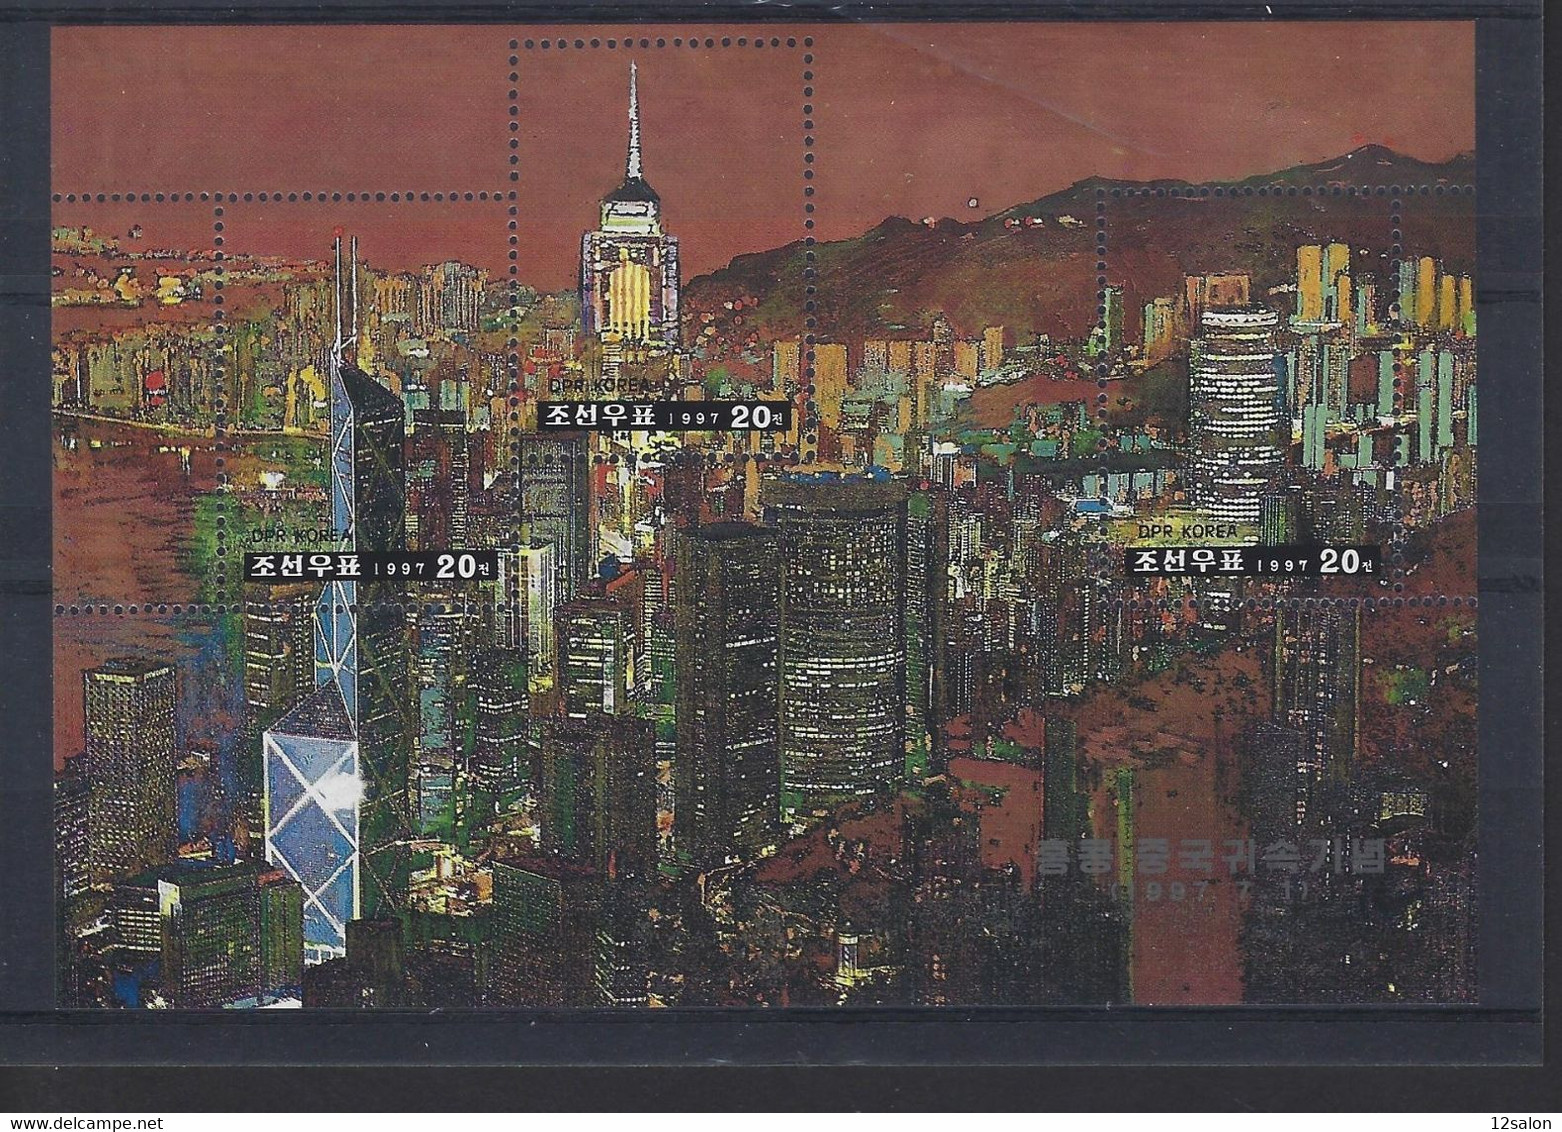 KOREE BLOC 1997 - Corée Du Sud